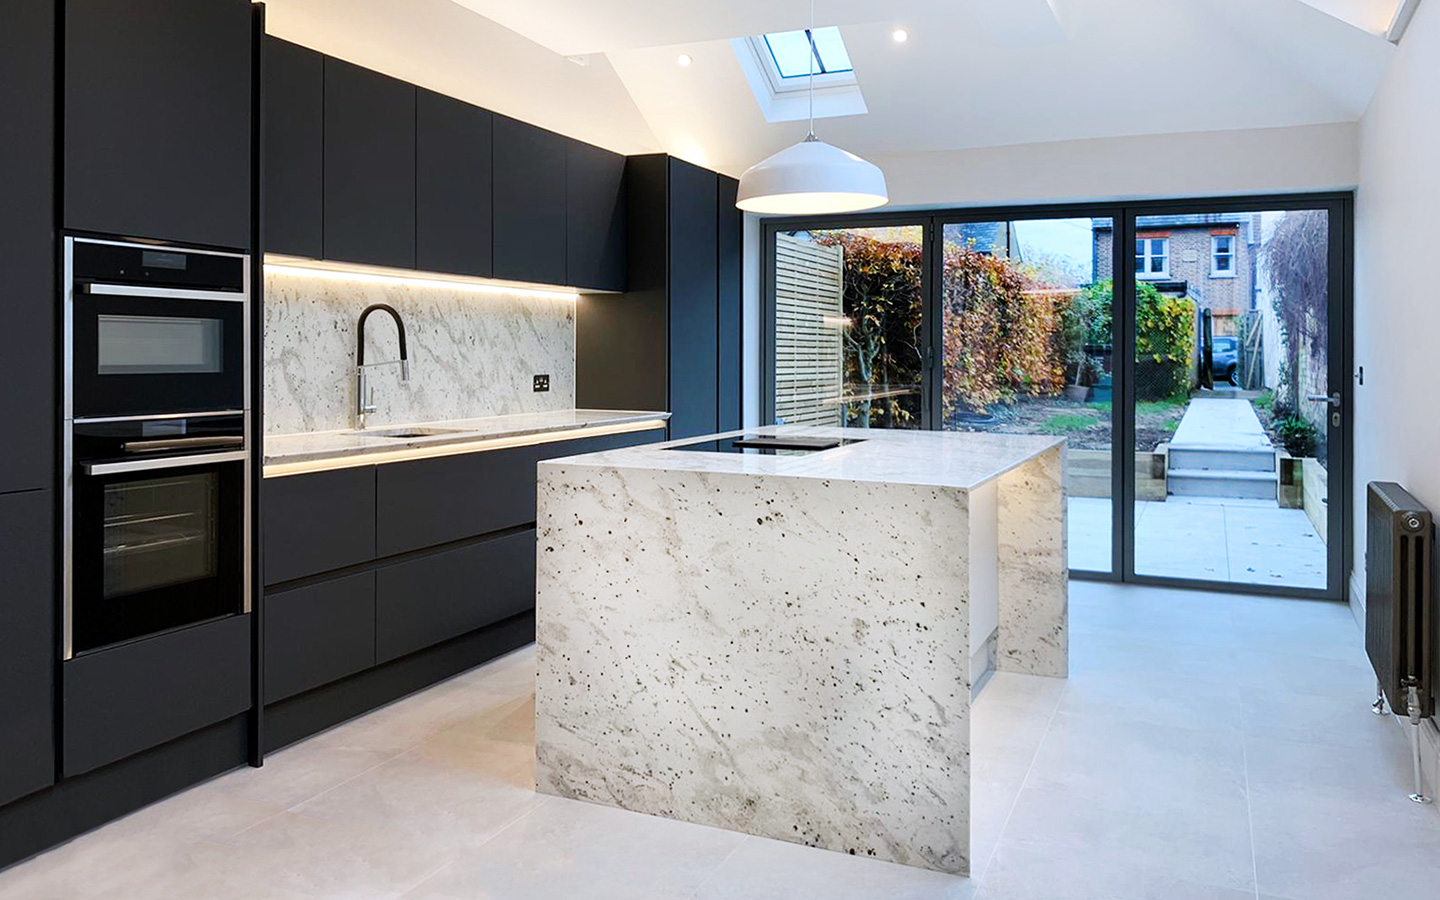 Black contemporary kitchen with andromeda white granite kitchen worktop